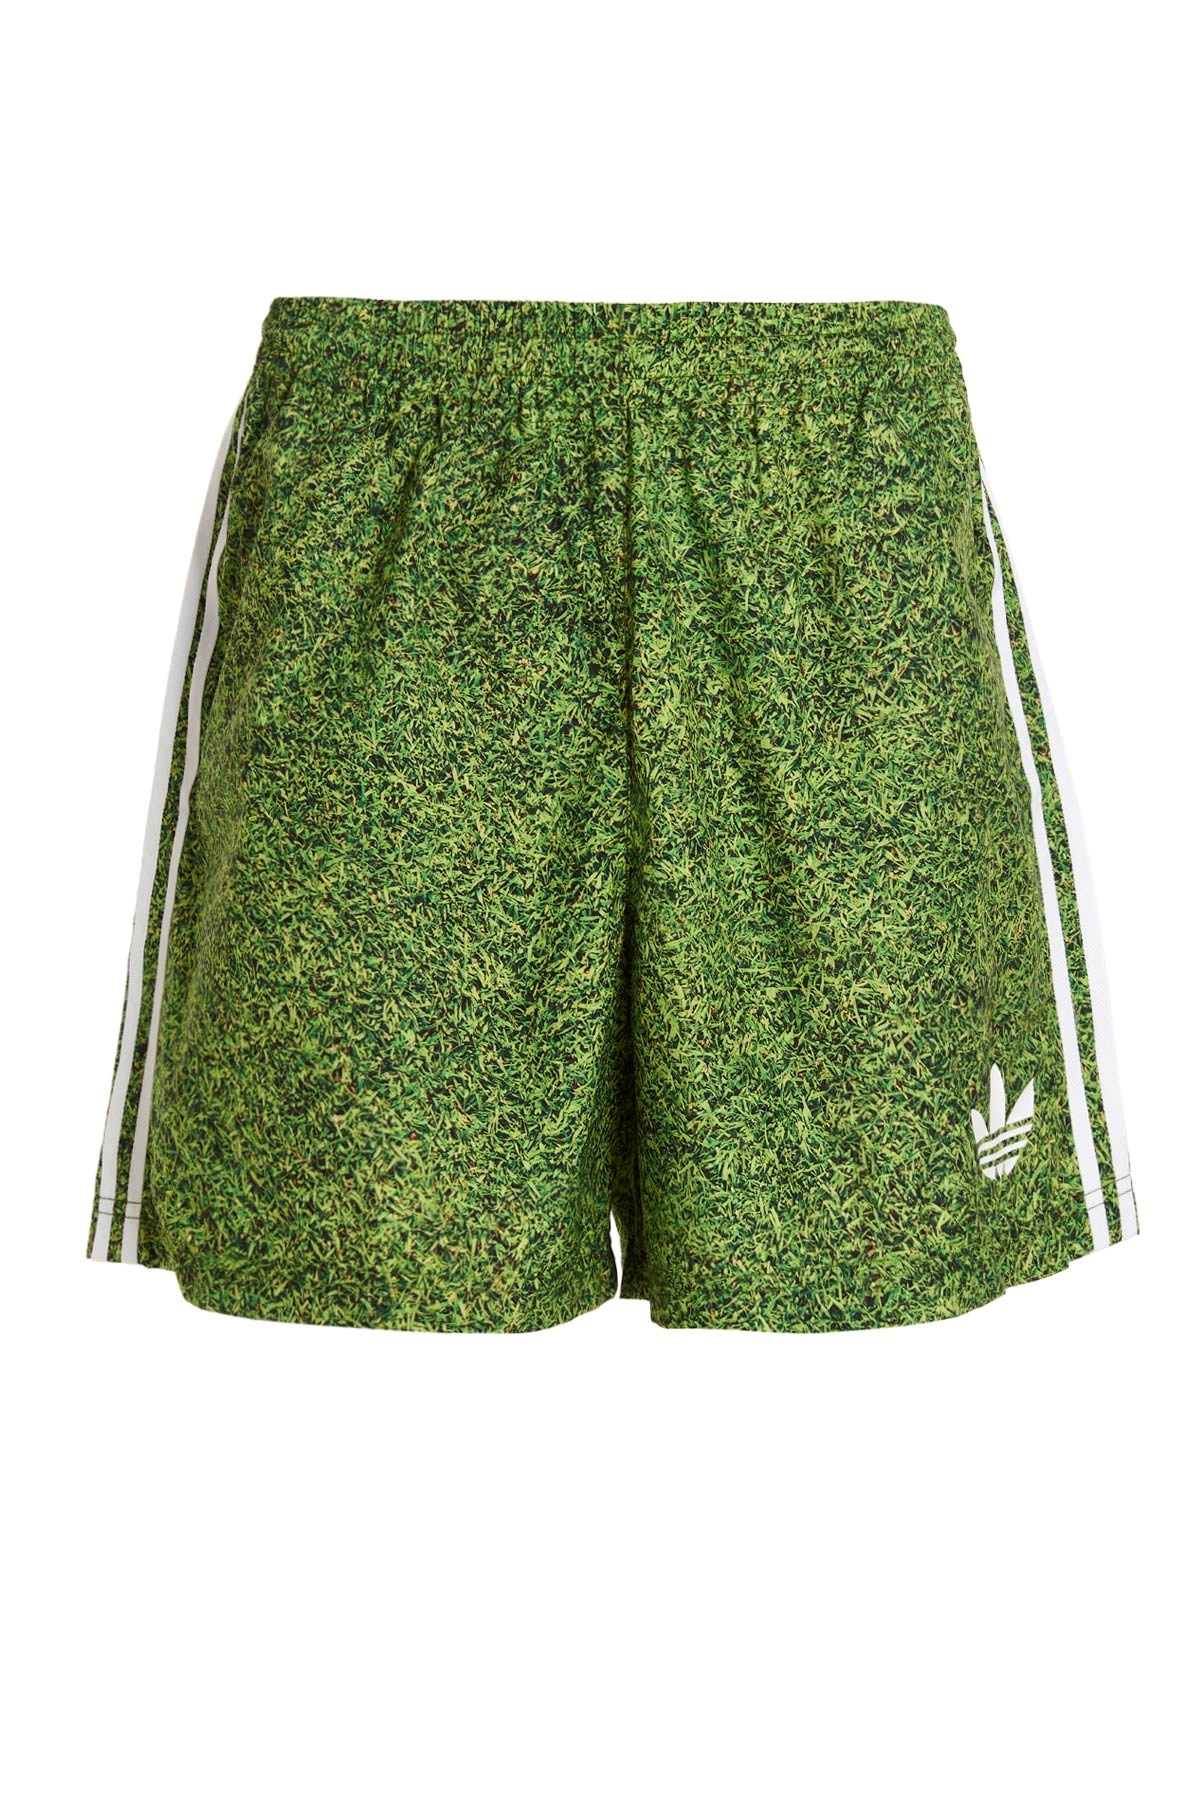 ADIDAS ORIGINALS Adidas Originals X Kerwin Frost – Bermuda-Shorts